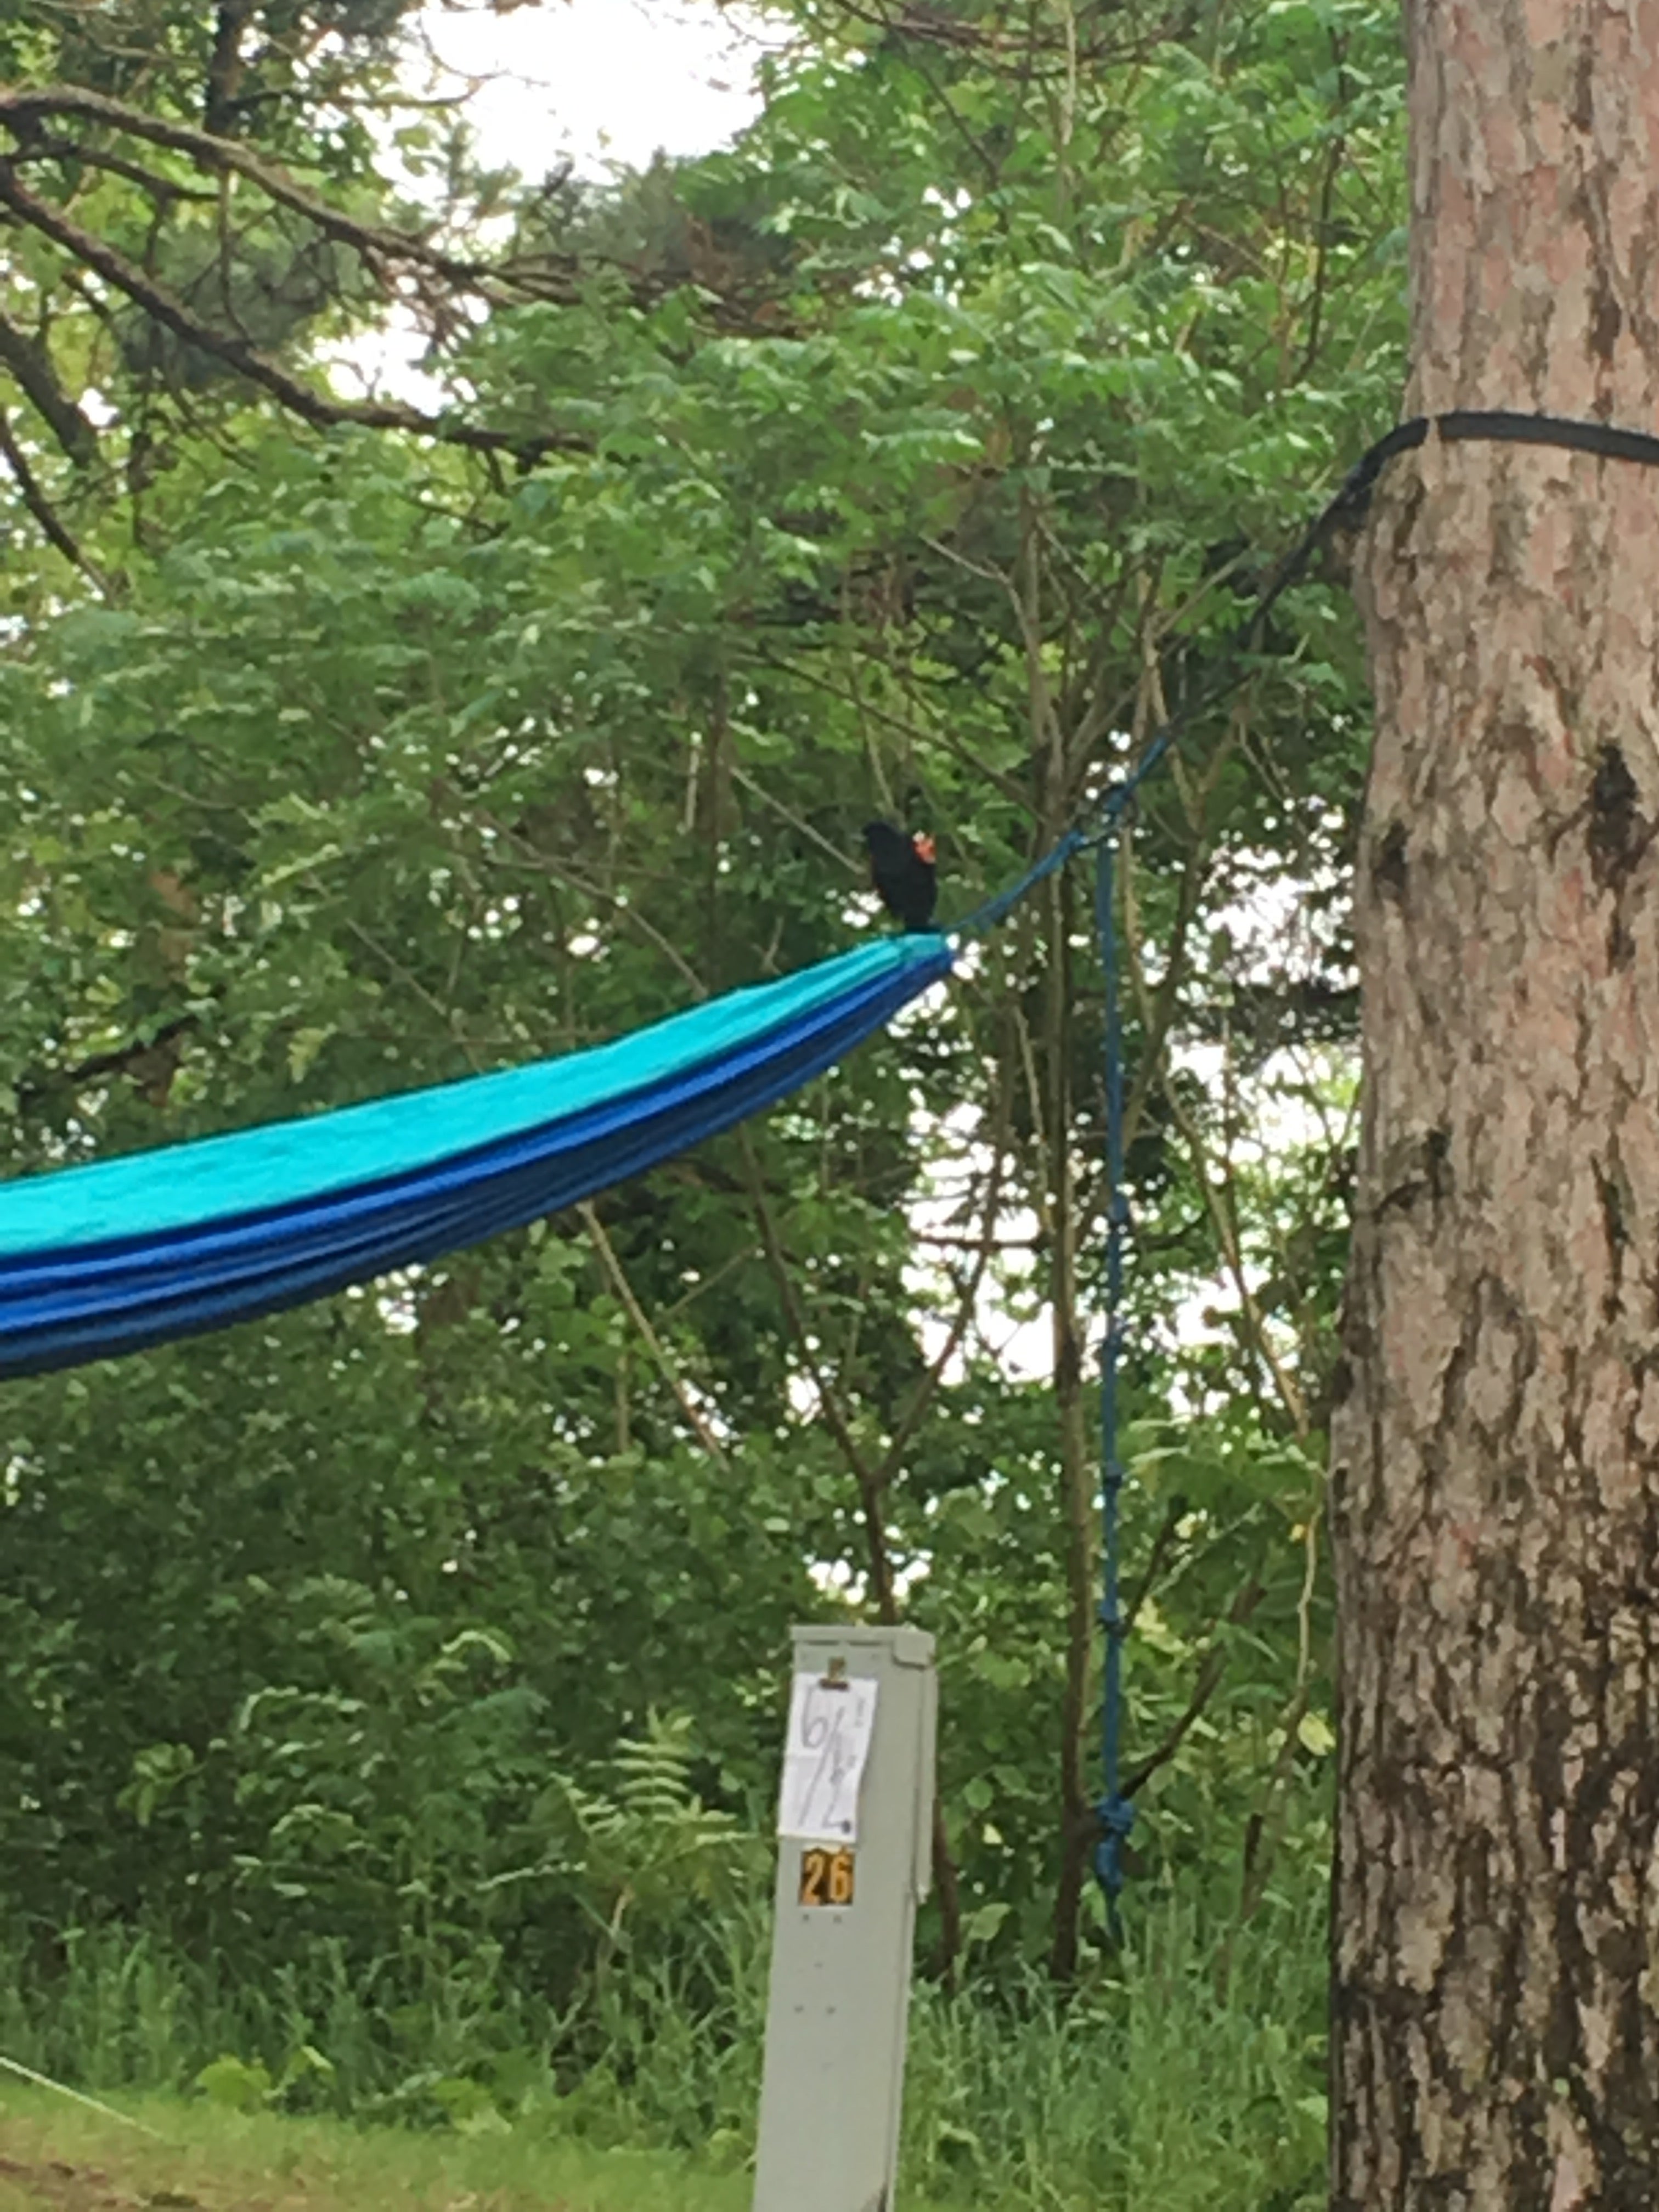 Perfect hammock trees, the little bird agreed!